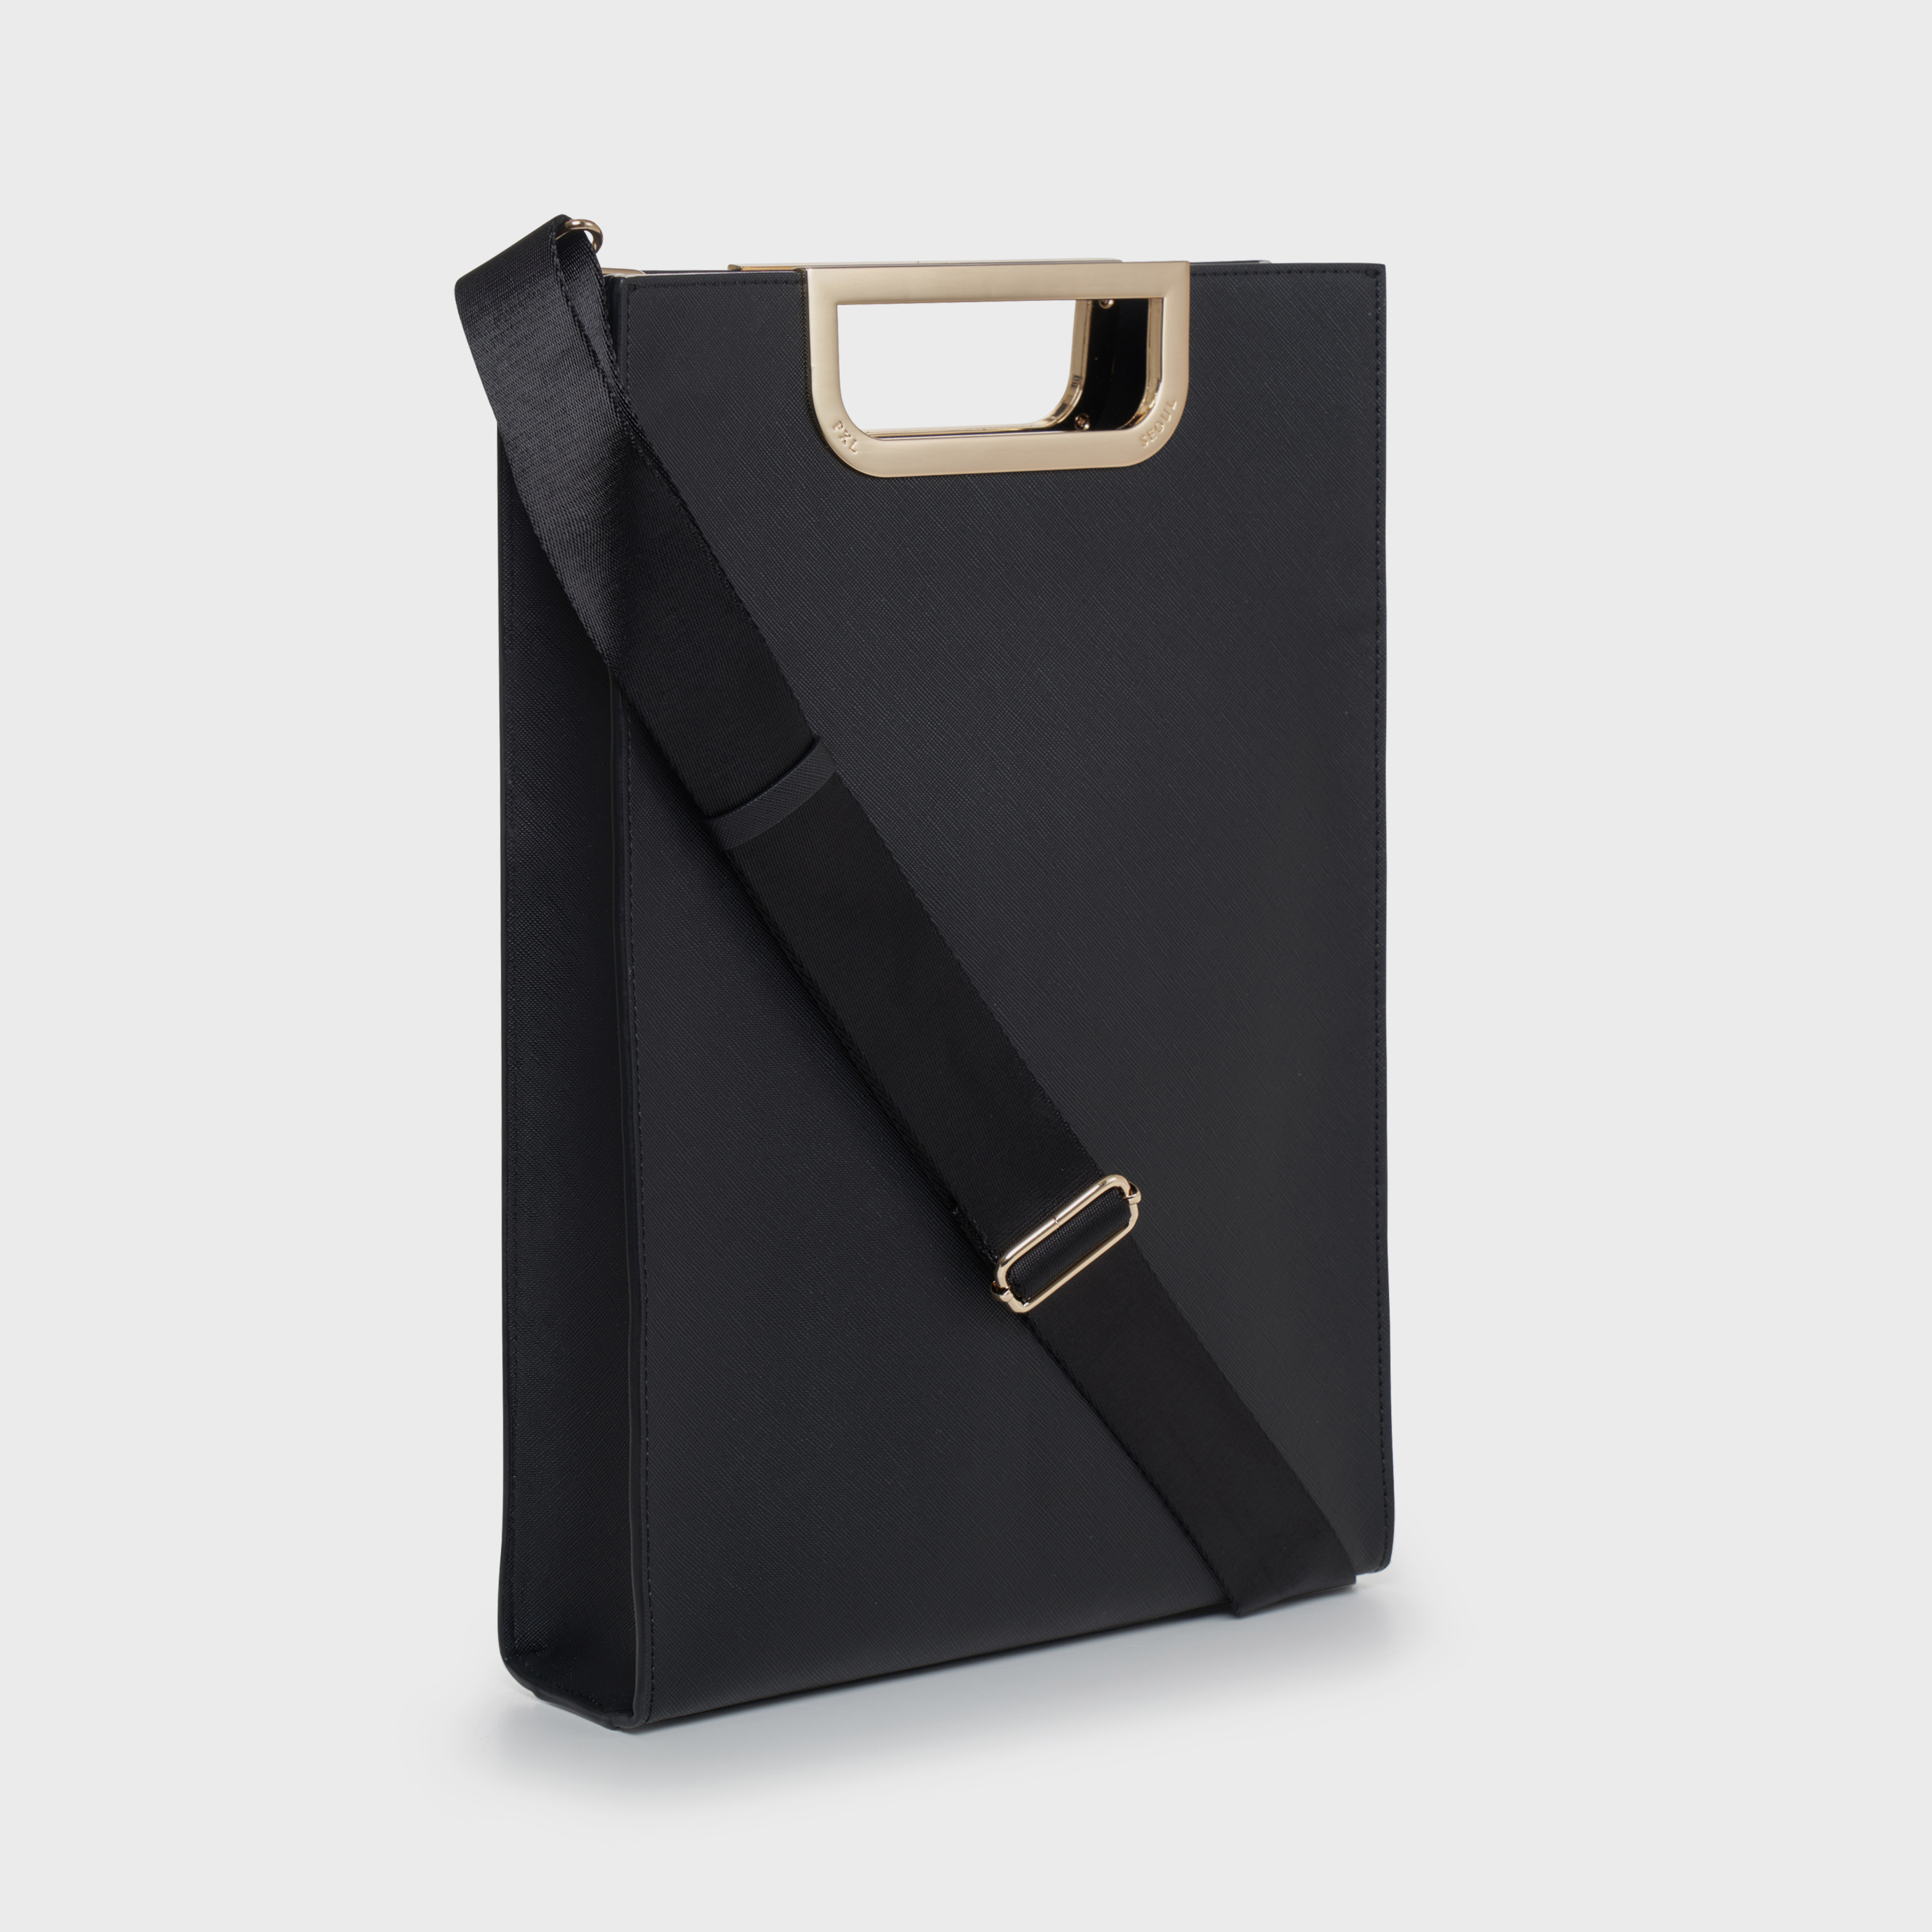 Metalgrip slim briefcase (Black/Gold)